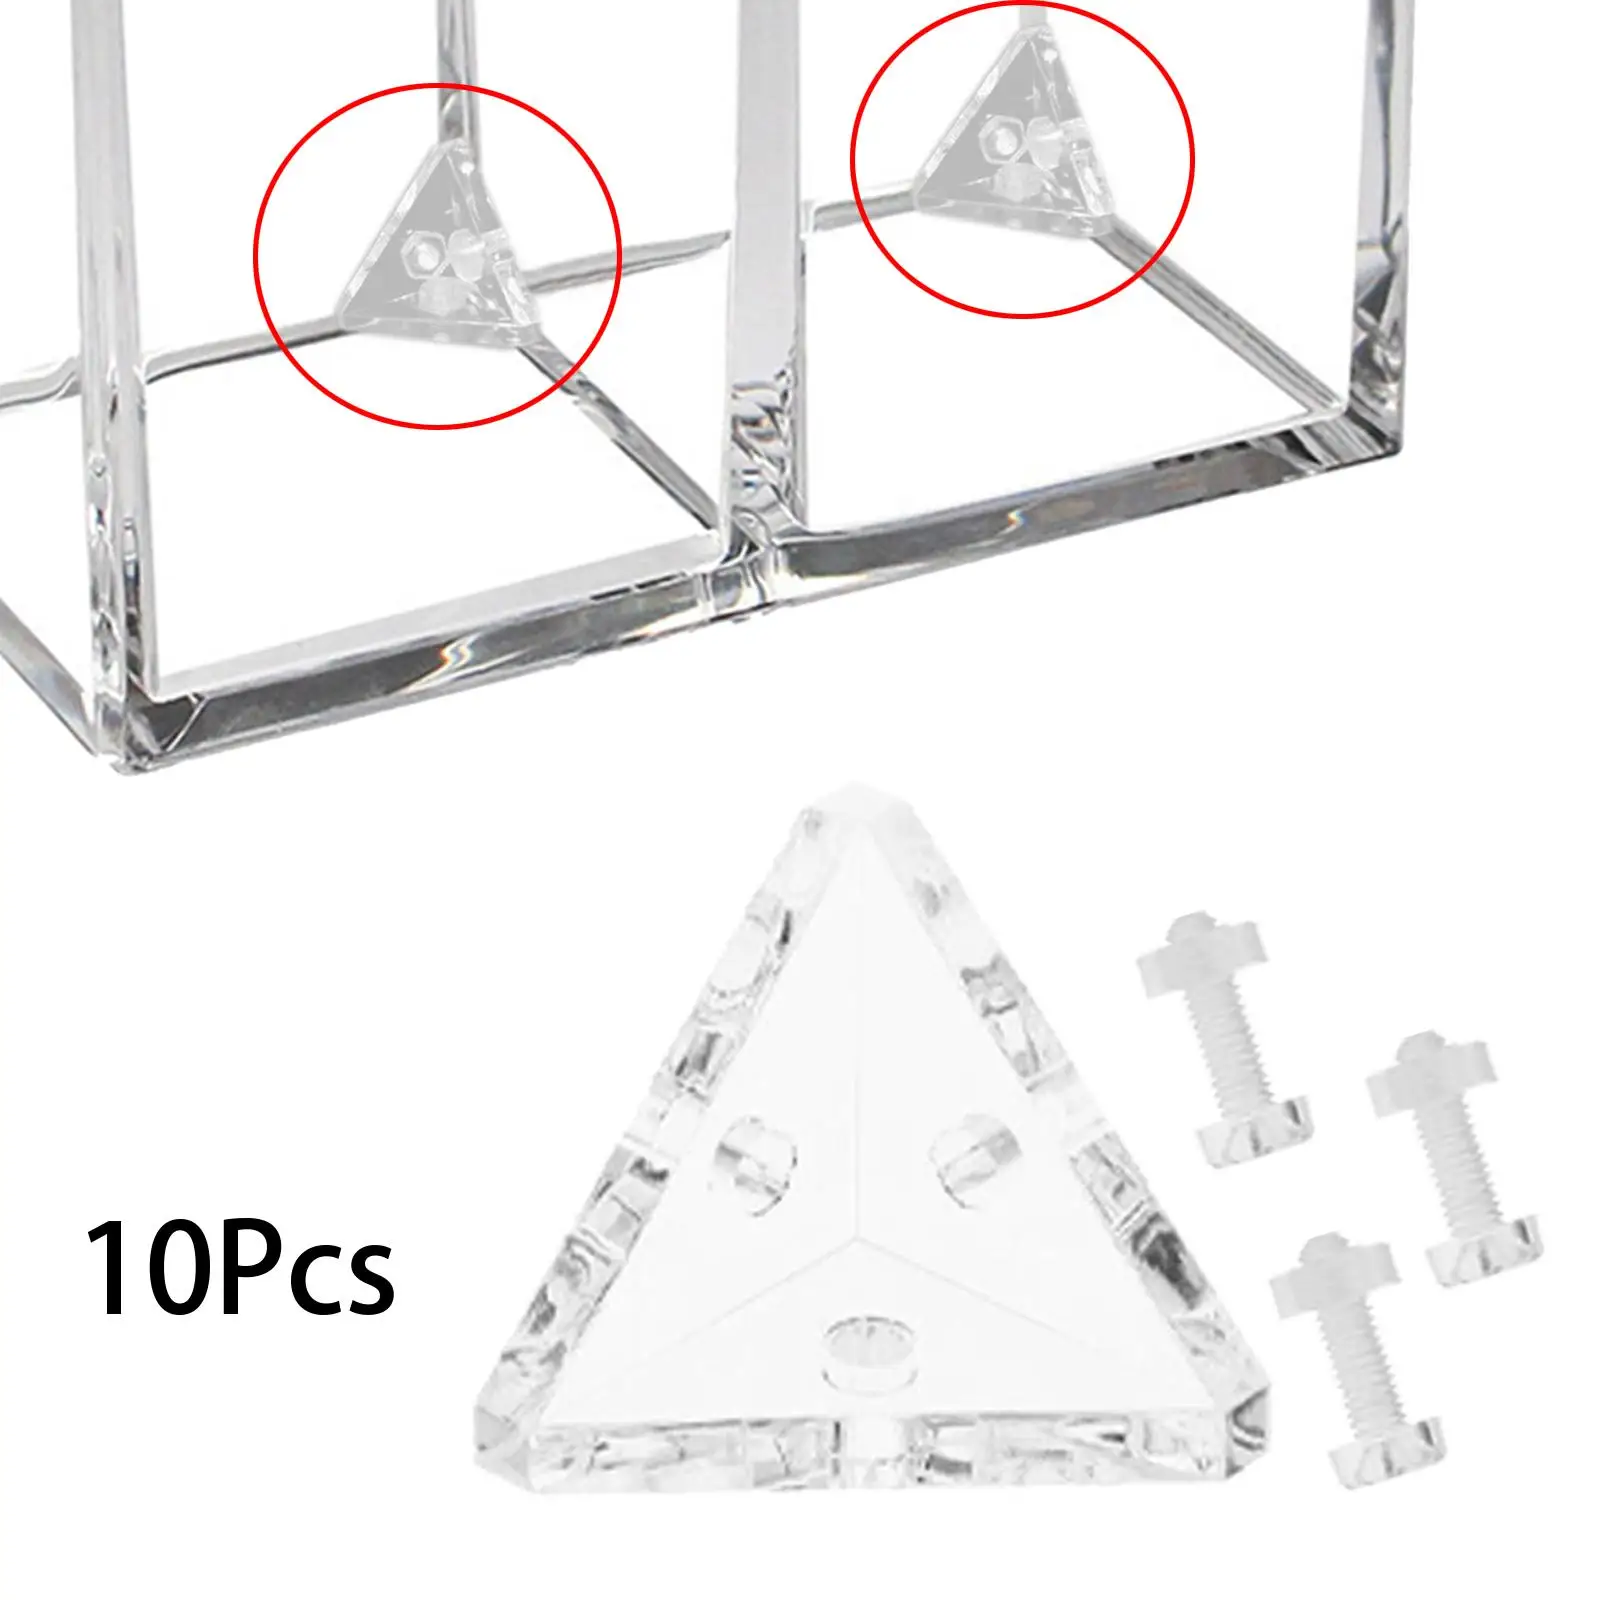 10 Pieces Acrylic Corner Brackets Display Case Triangle Connector Showcase